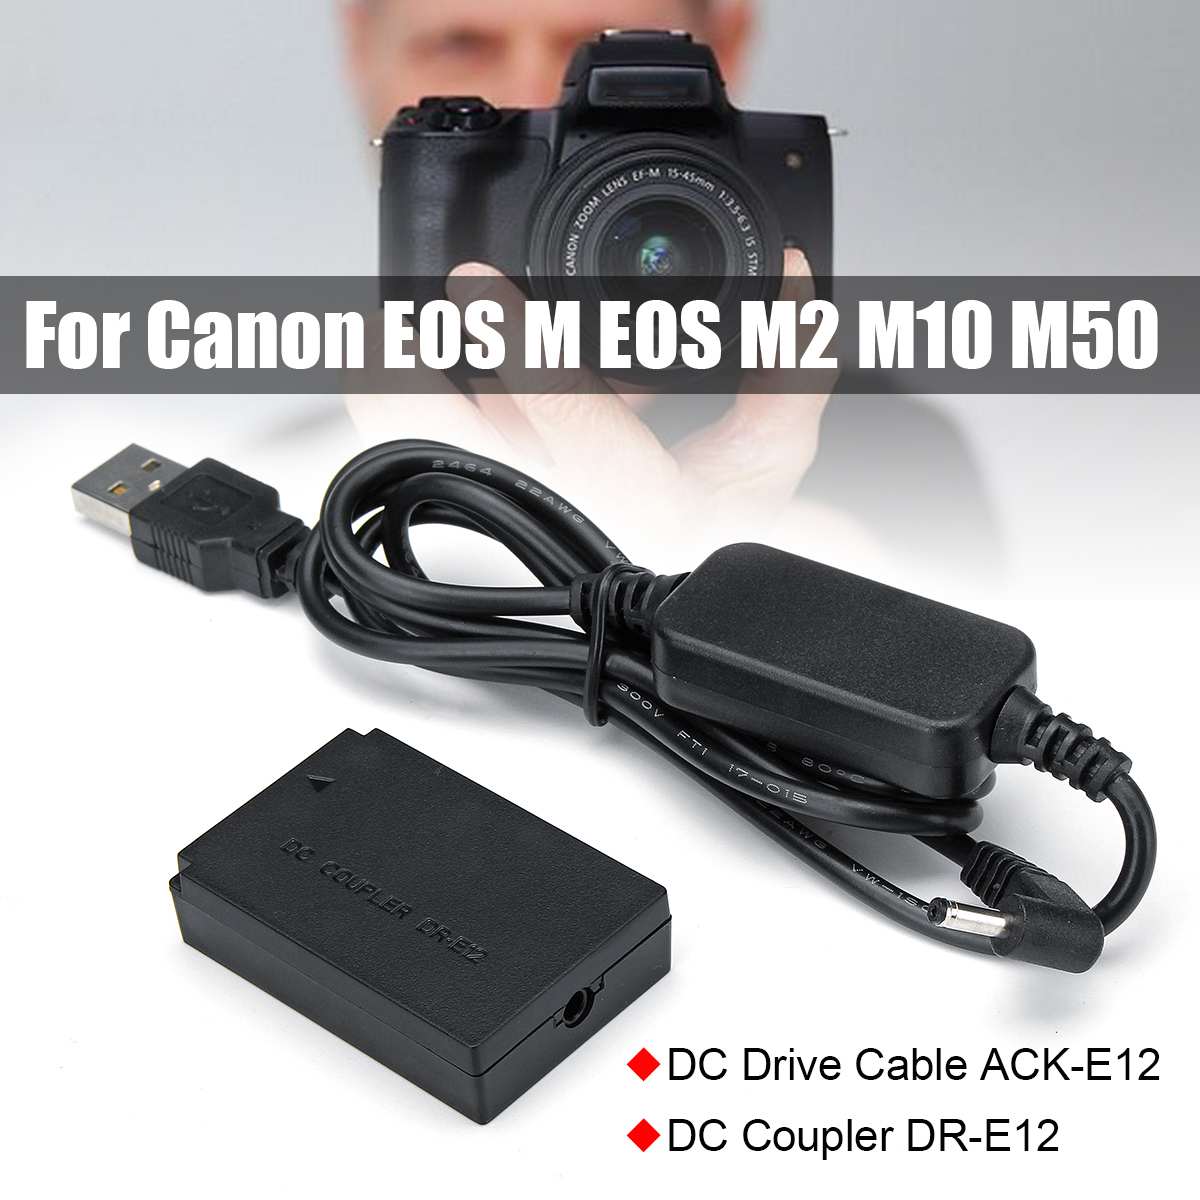 5v usb -kabel  dc 8.4v ack -e12 mobil powerbank+dr -e12 dc coupler lp -e12 dummy -batteri til canon eos m eos  m2 m10 m50 kamera